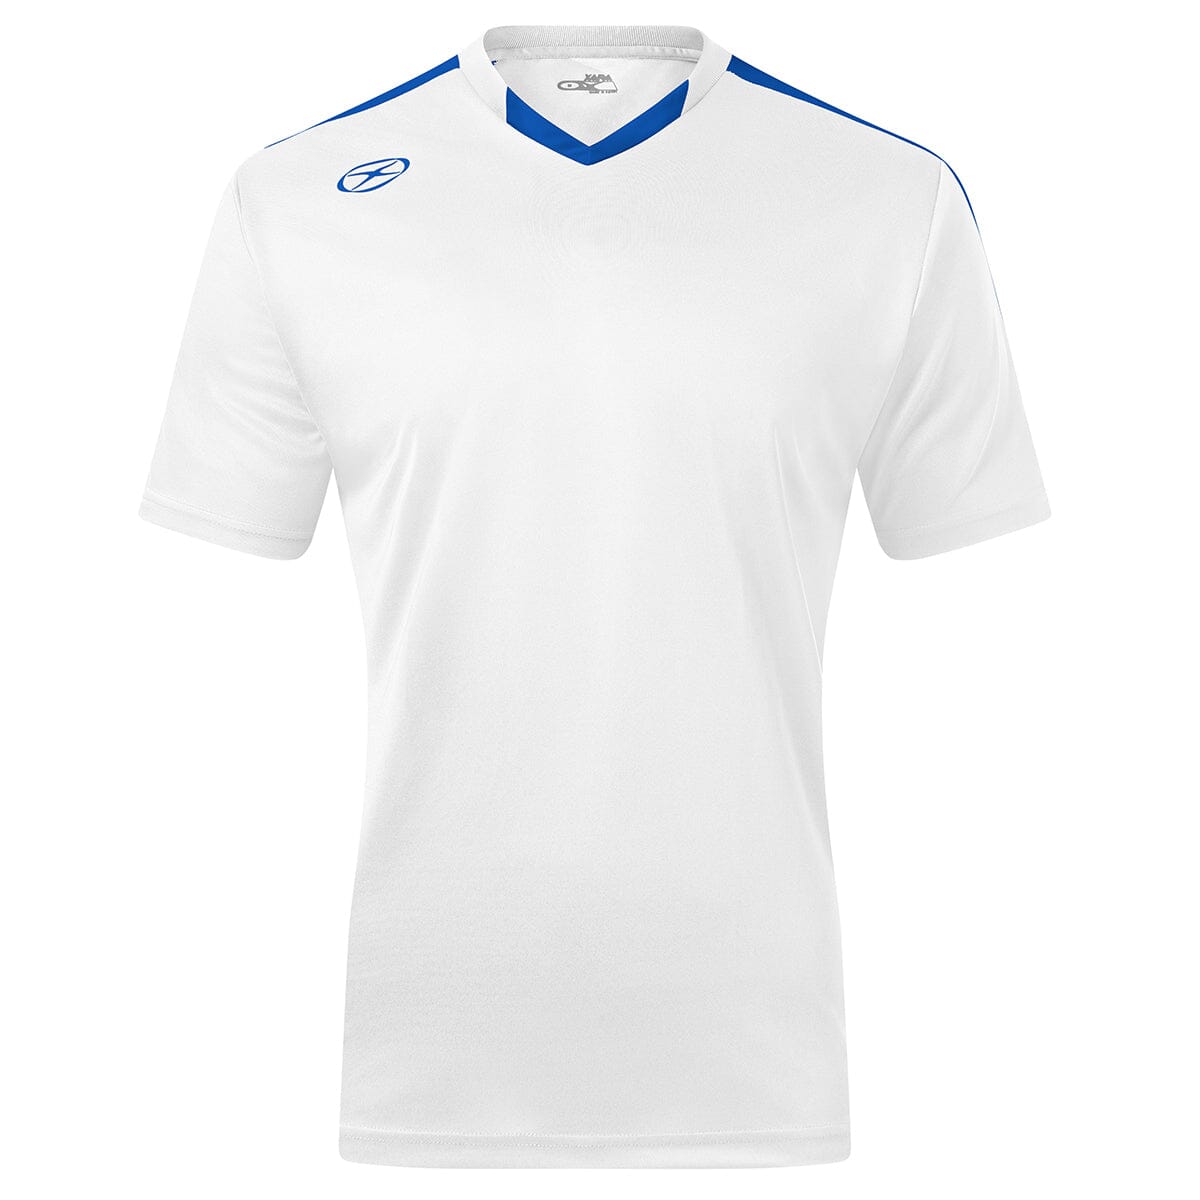 Britannia Jersey - Away Colors - Male Shirt Xara Soccer White/Royal Youth Medium 